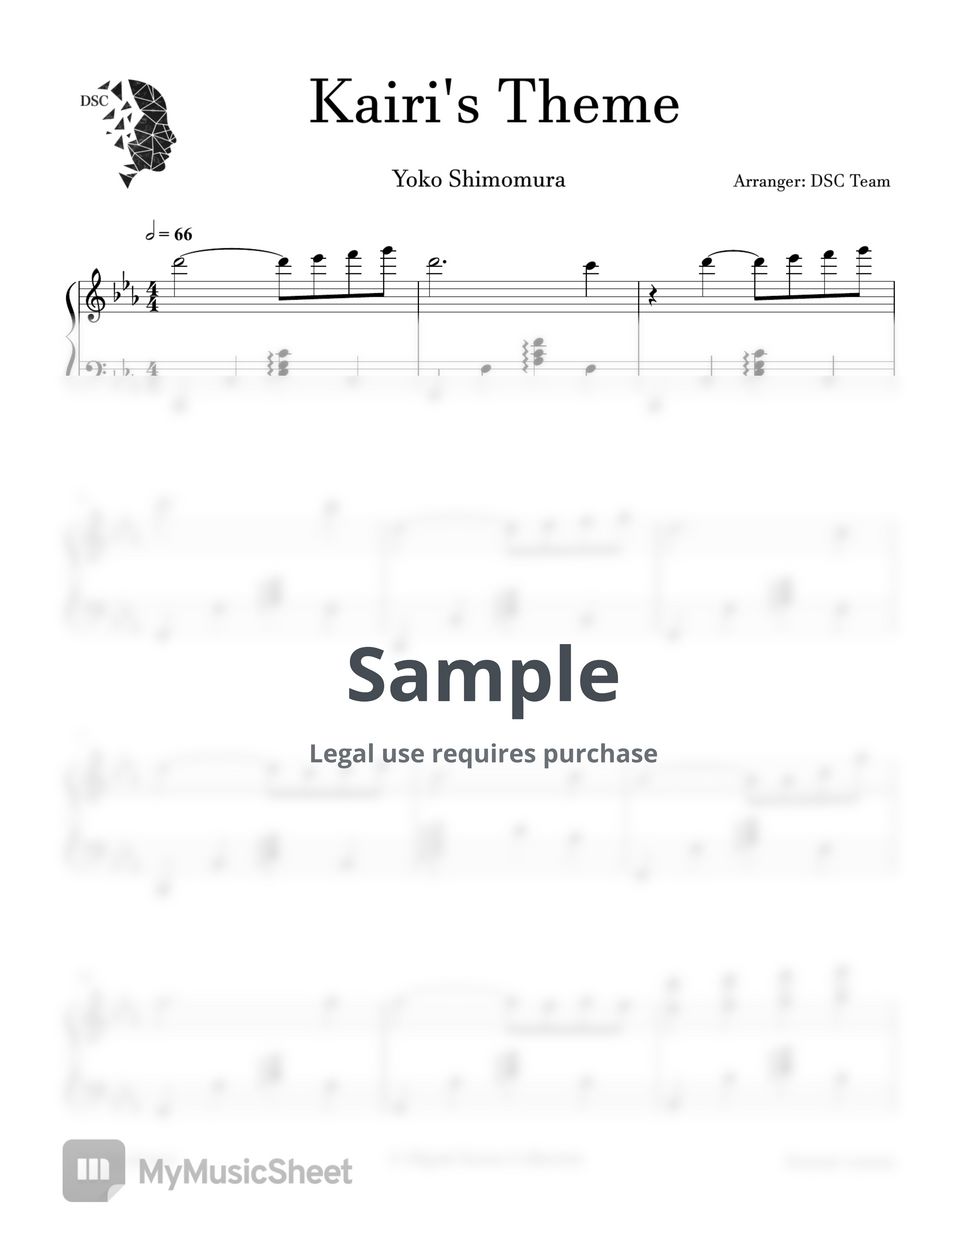 Yoko Shimomura - Kairi's Theme (OST Kingdom Hearts) by Digital Scores Collection